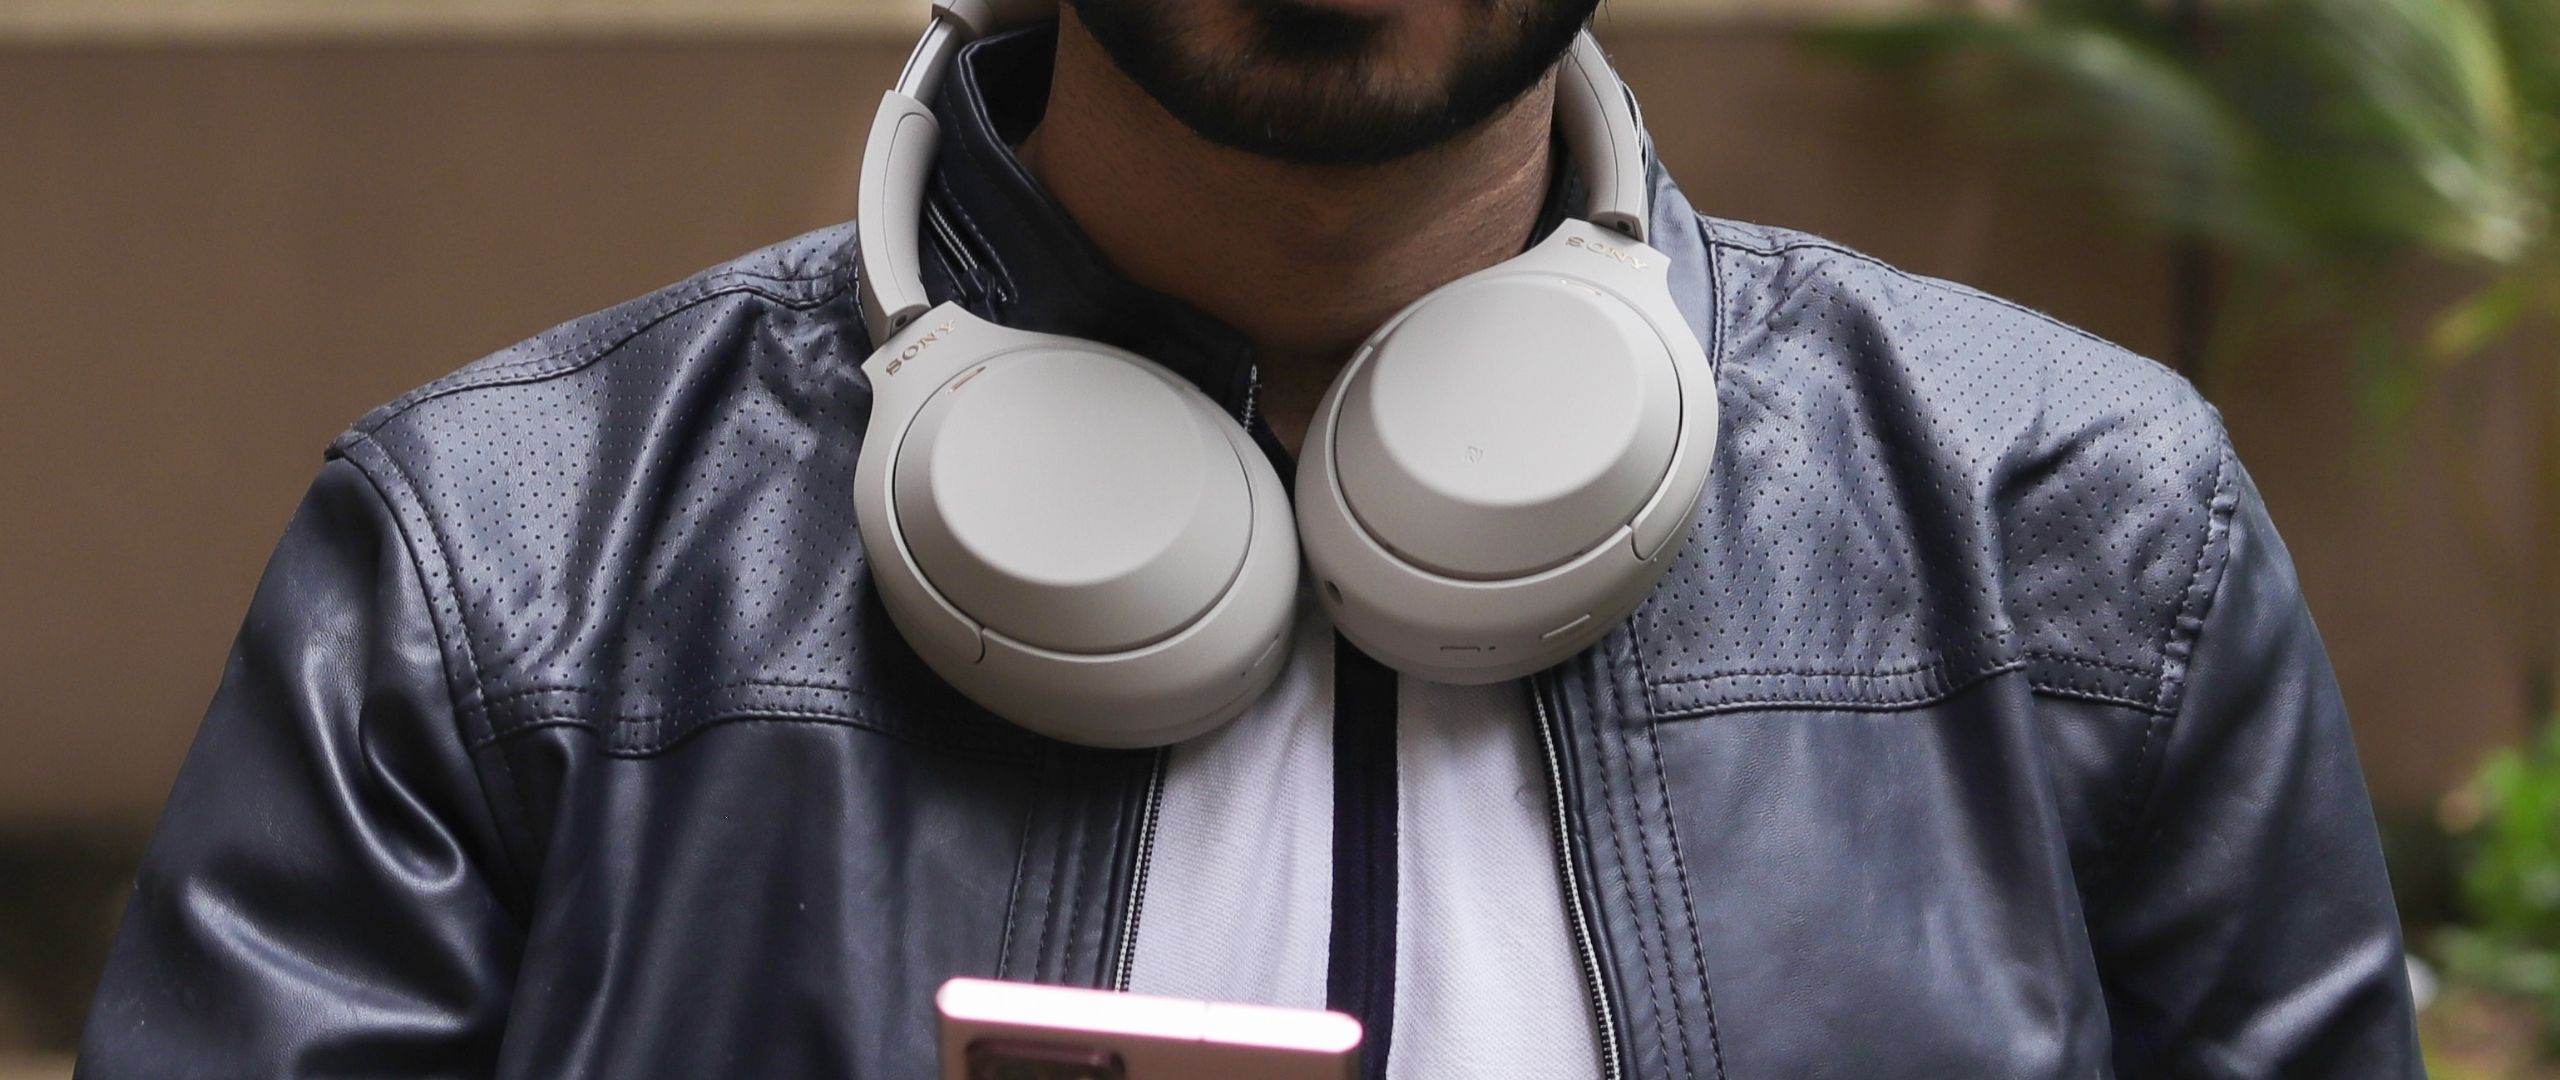 Sony WH-1000XM4 Wireless Headphones review | TechRadar